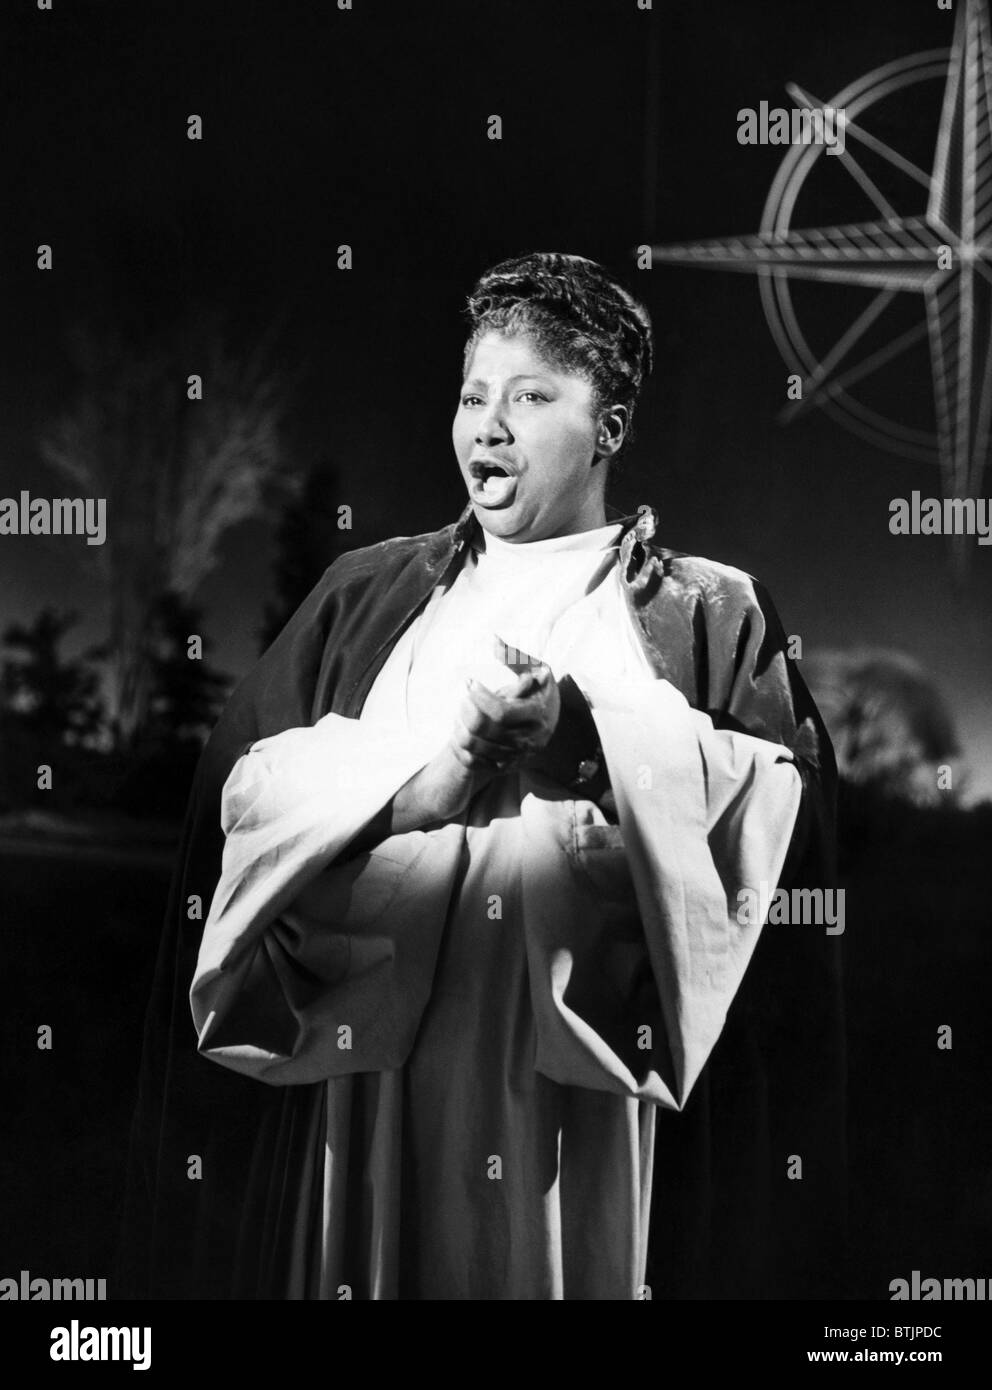 American gospel singer Mahalia Jackson, (1912-1972), c. 1960's. Stock Photo